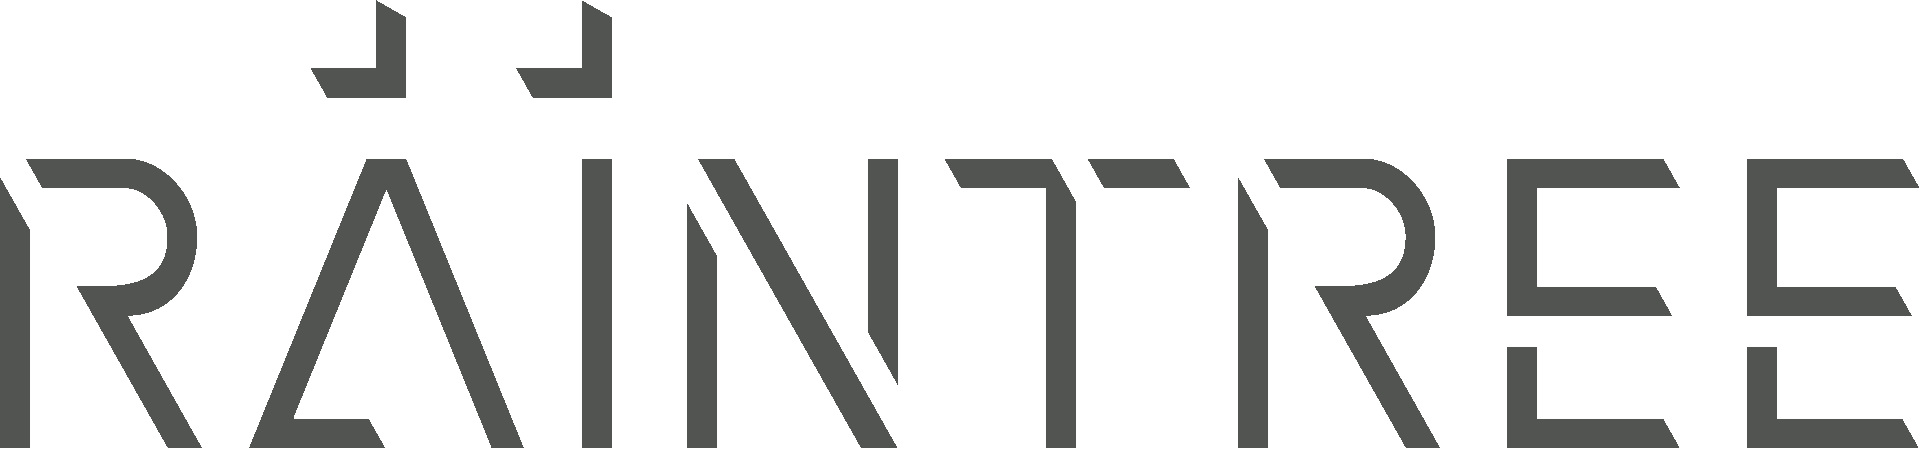 NEW Raintree logo.png